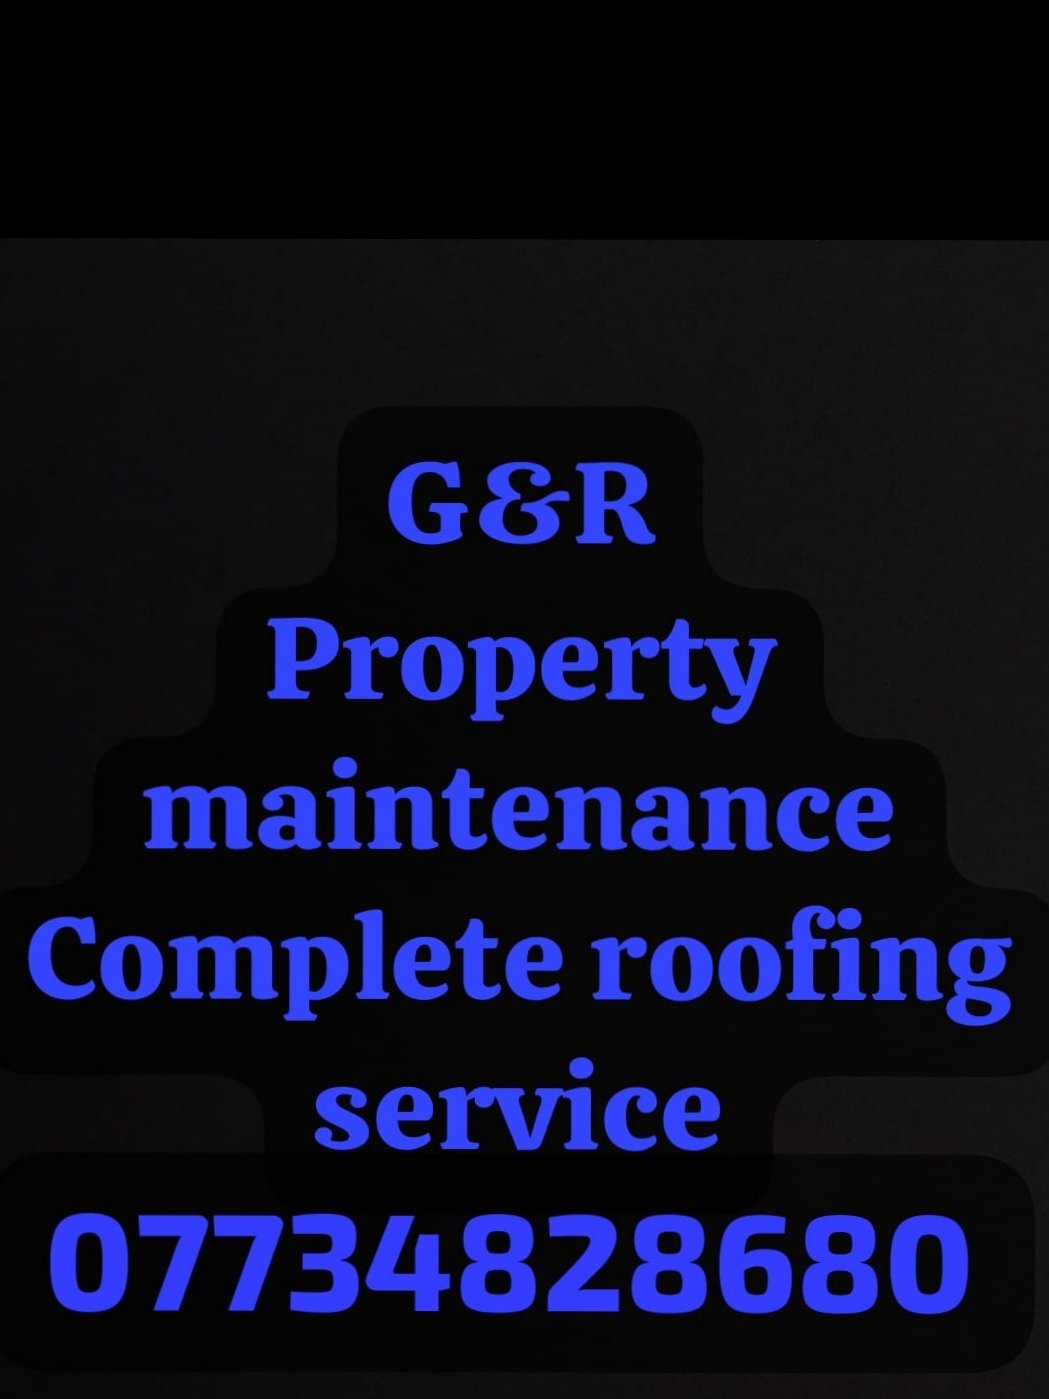 Main header - "G&R Property Maintenance"